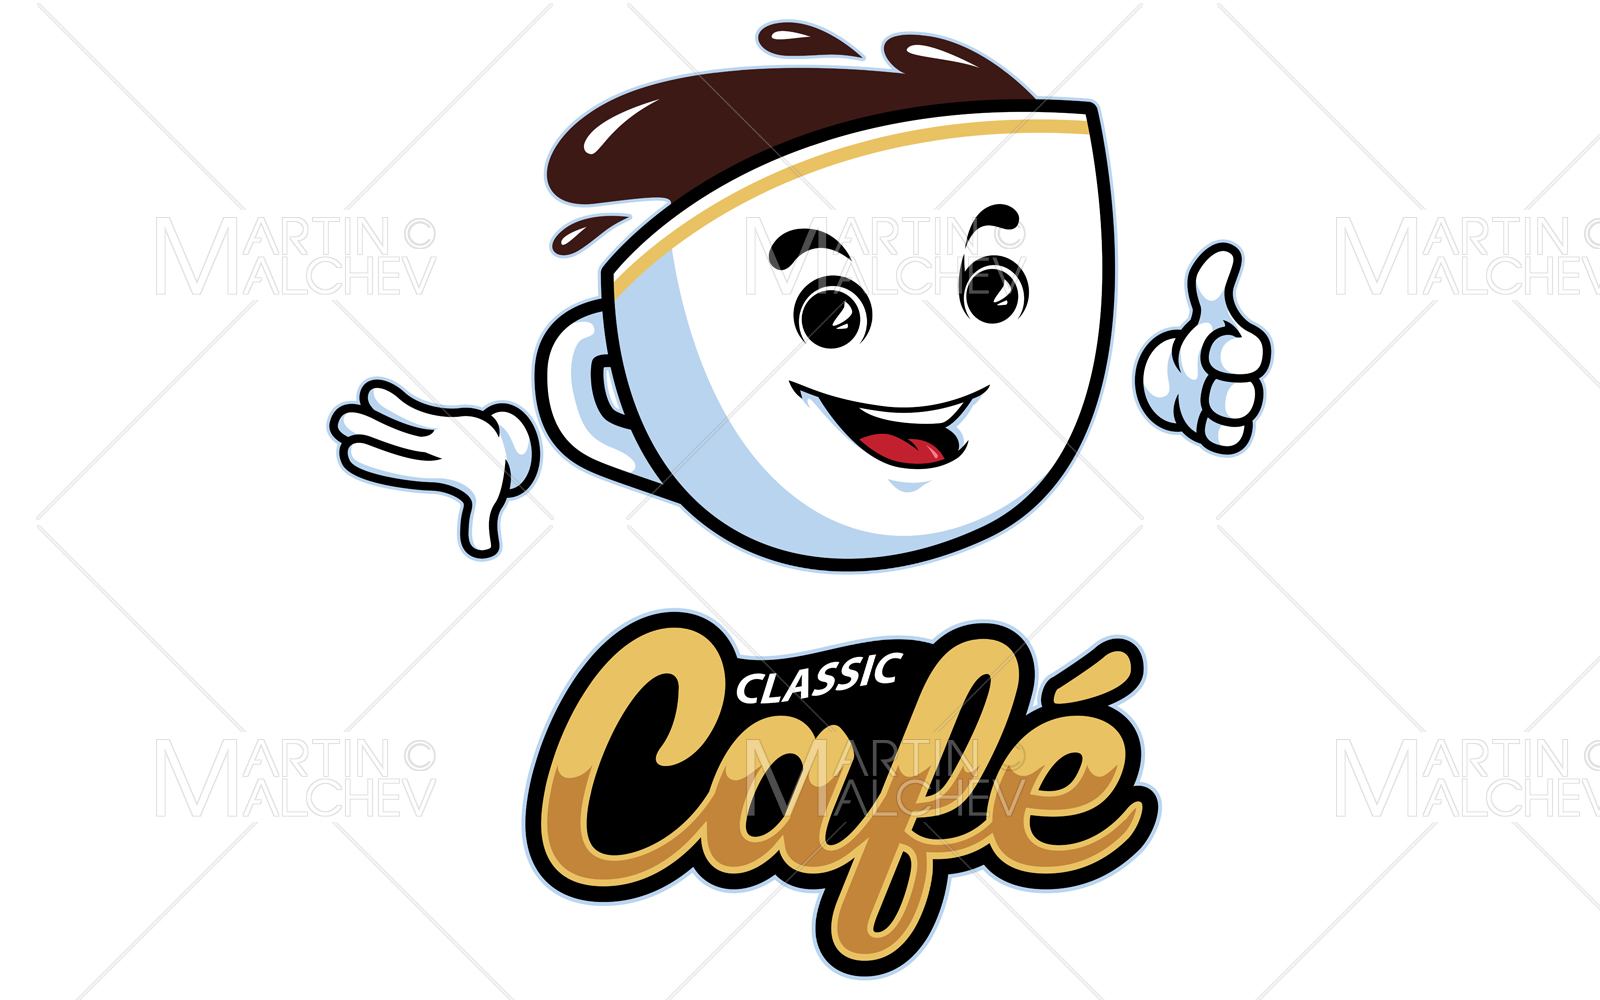 Cafe Cartoon Mascot Vector Illustration